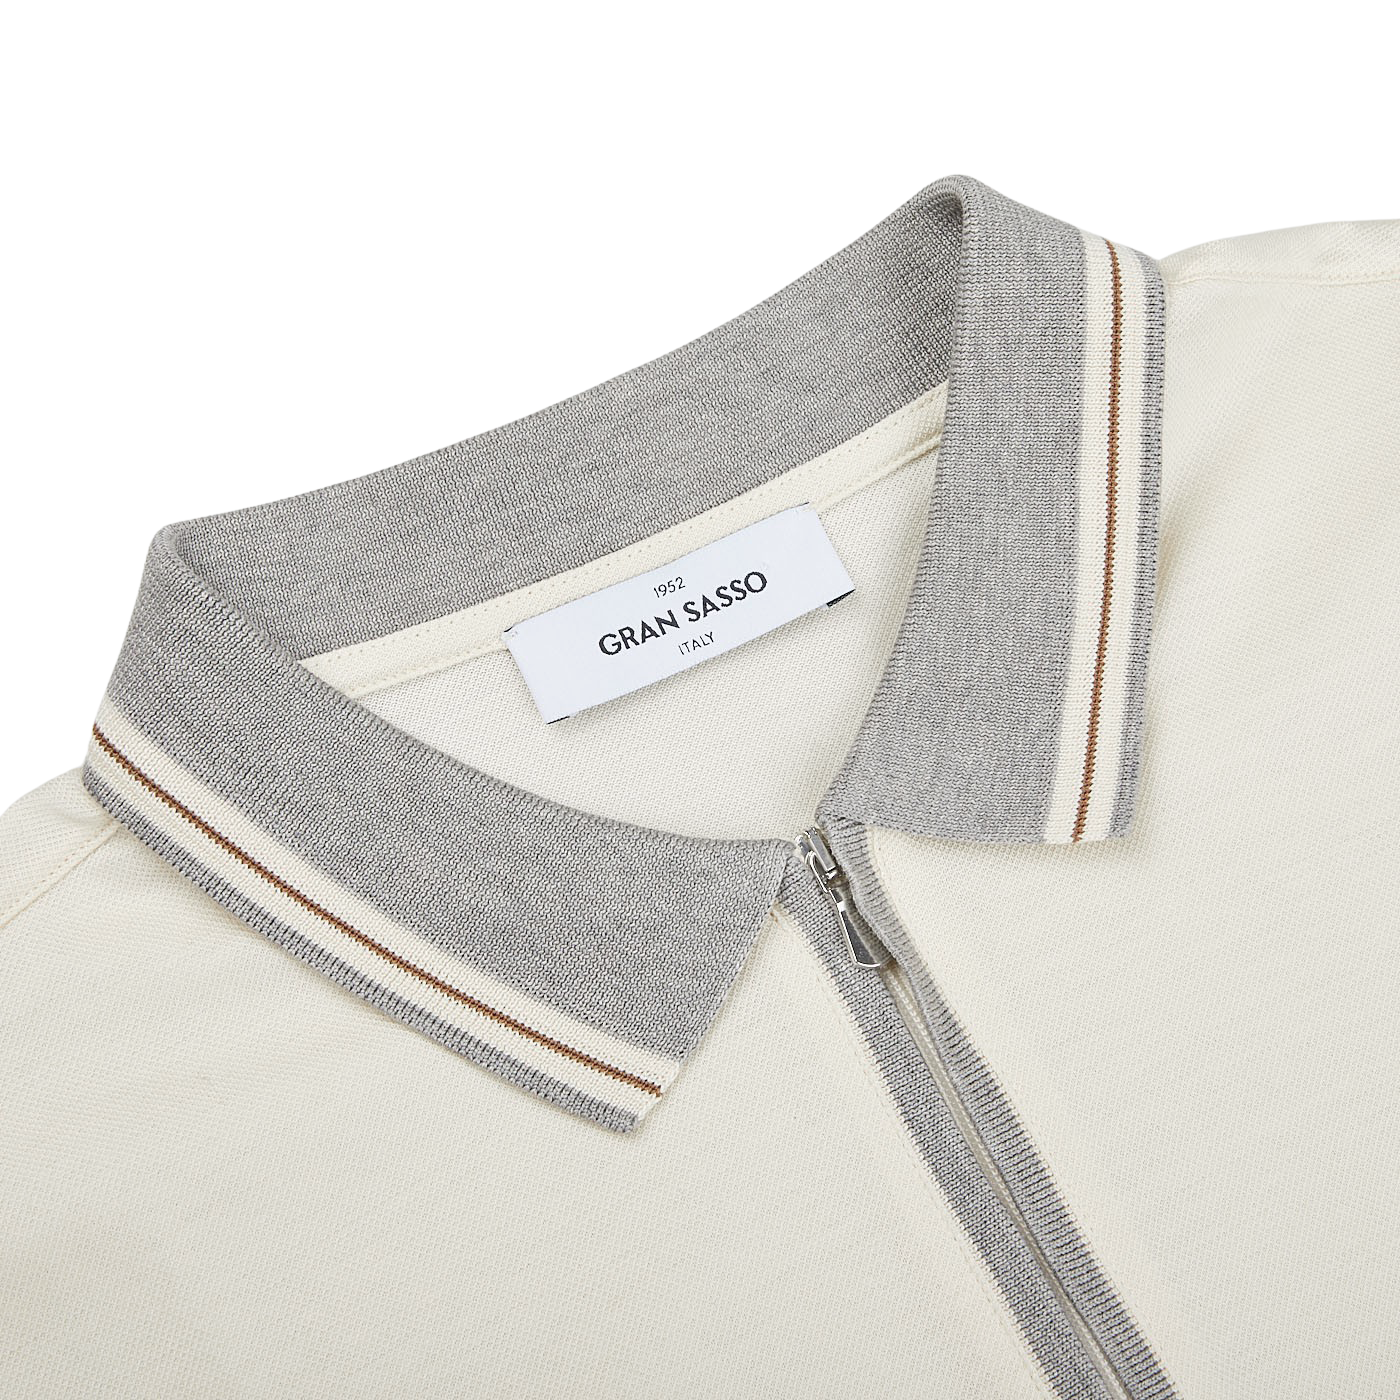 A Cream Beige Filo Scozia Zip Polo Shirt with a grey collar and by Gran Sasso.